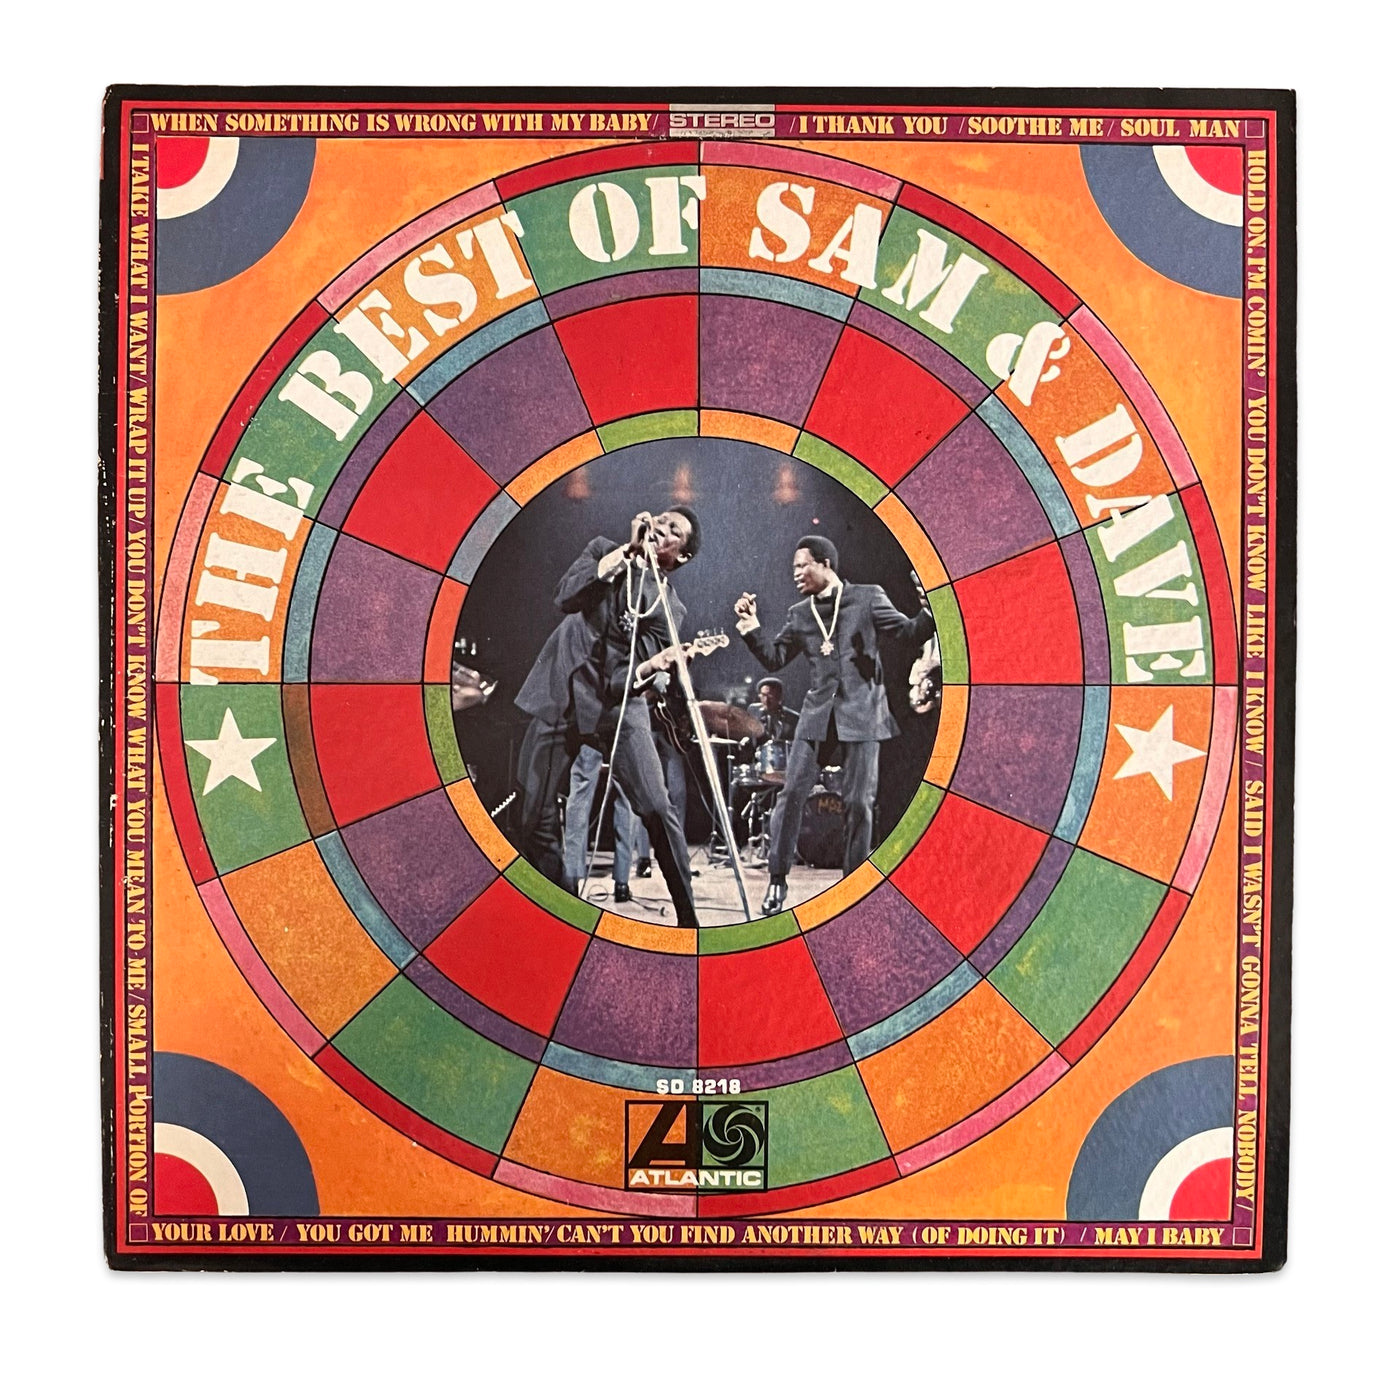 Sam & Dave – The Best Of Sam & Dave